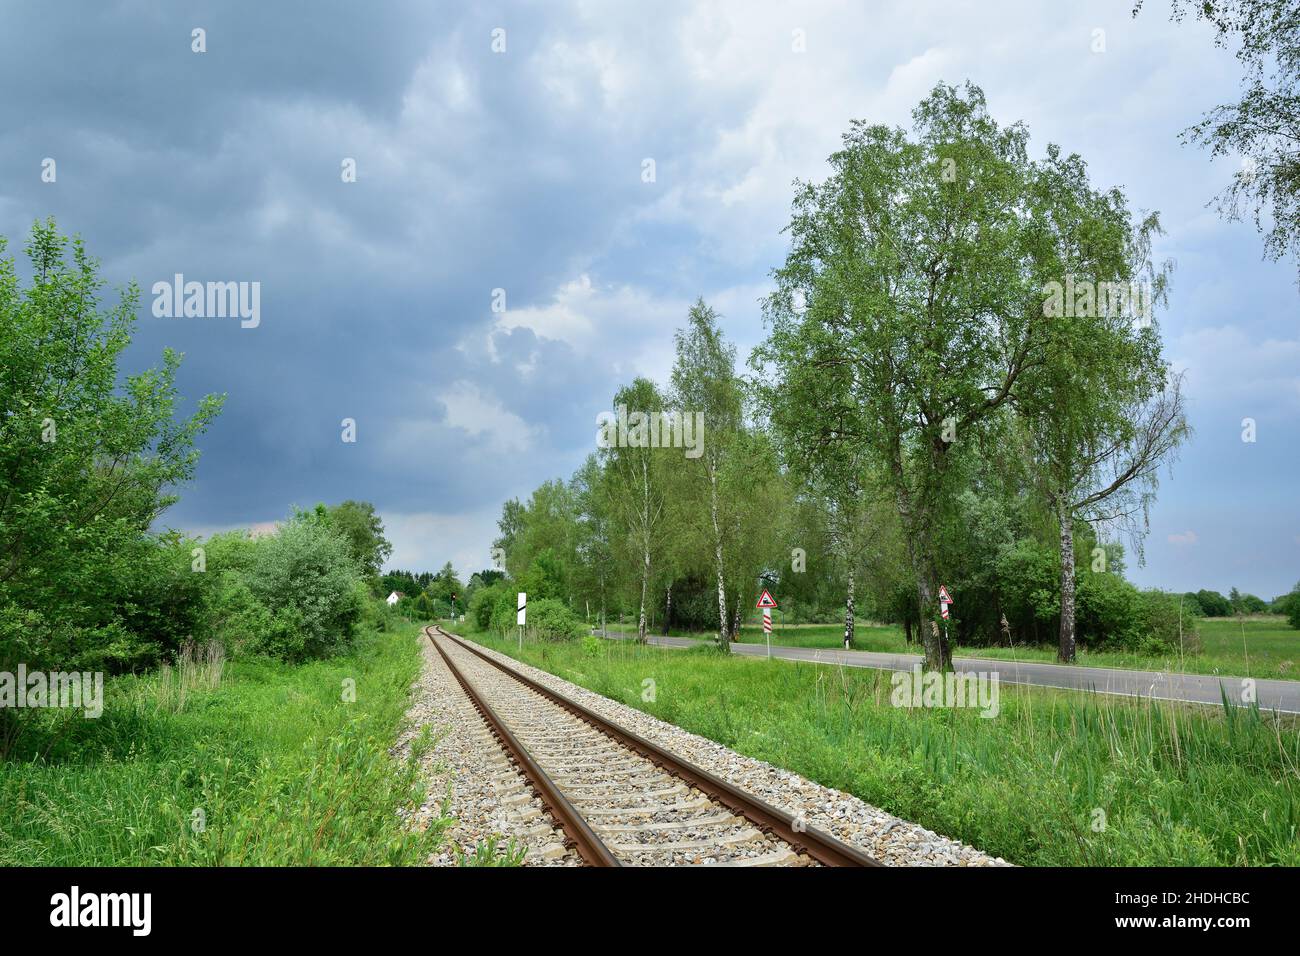 rails, track, railway, rail, tracks, railways Stock Photo